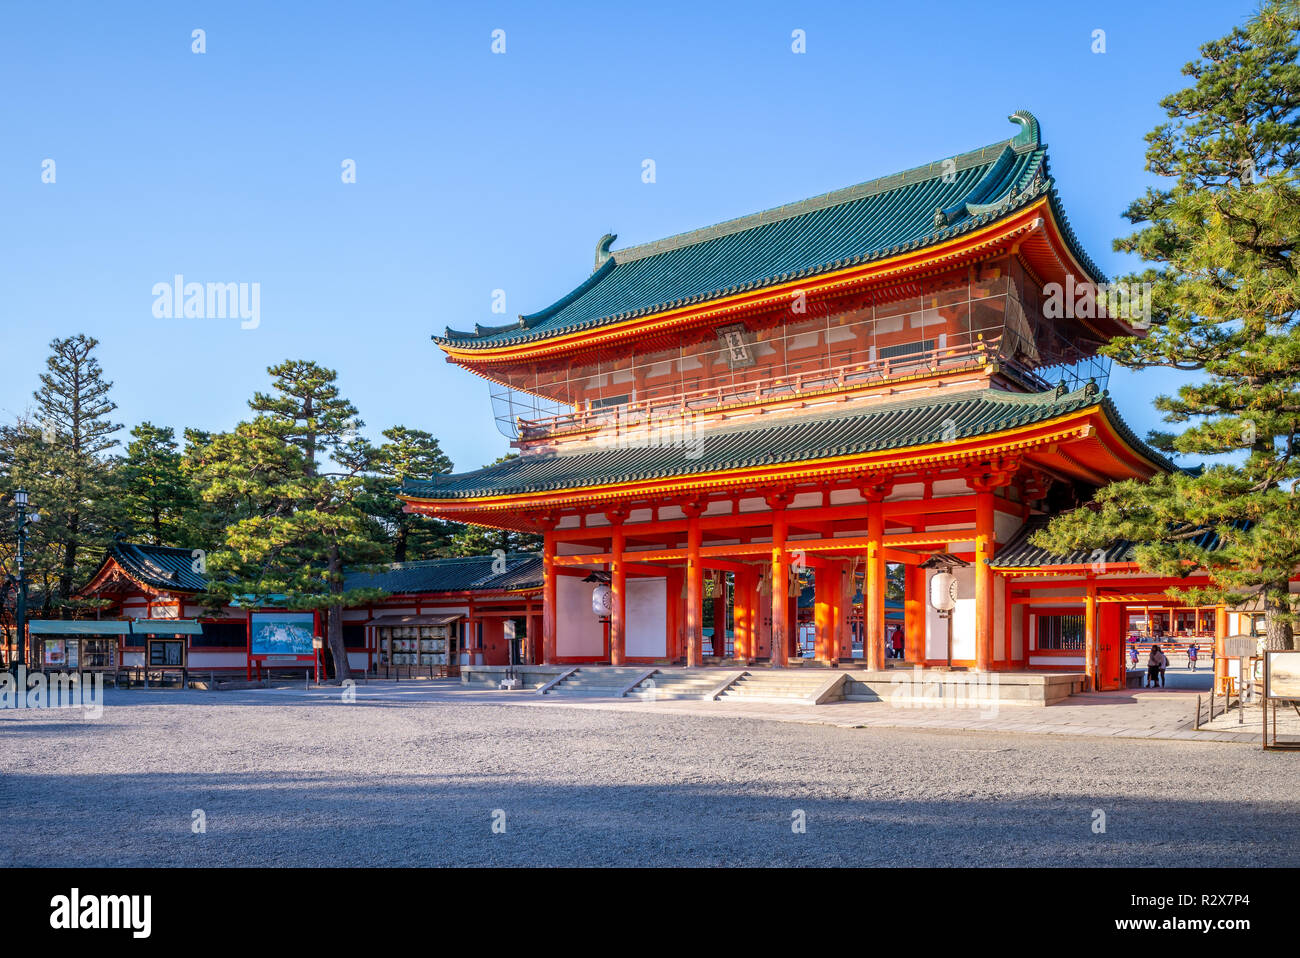 otenmon, Main gate of Heian jingu shrine in Kyoto Stock Photo